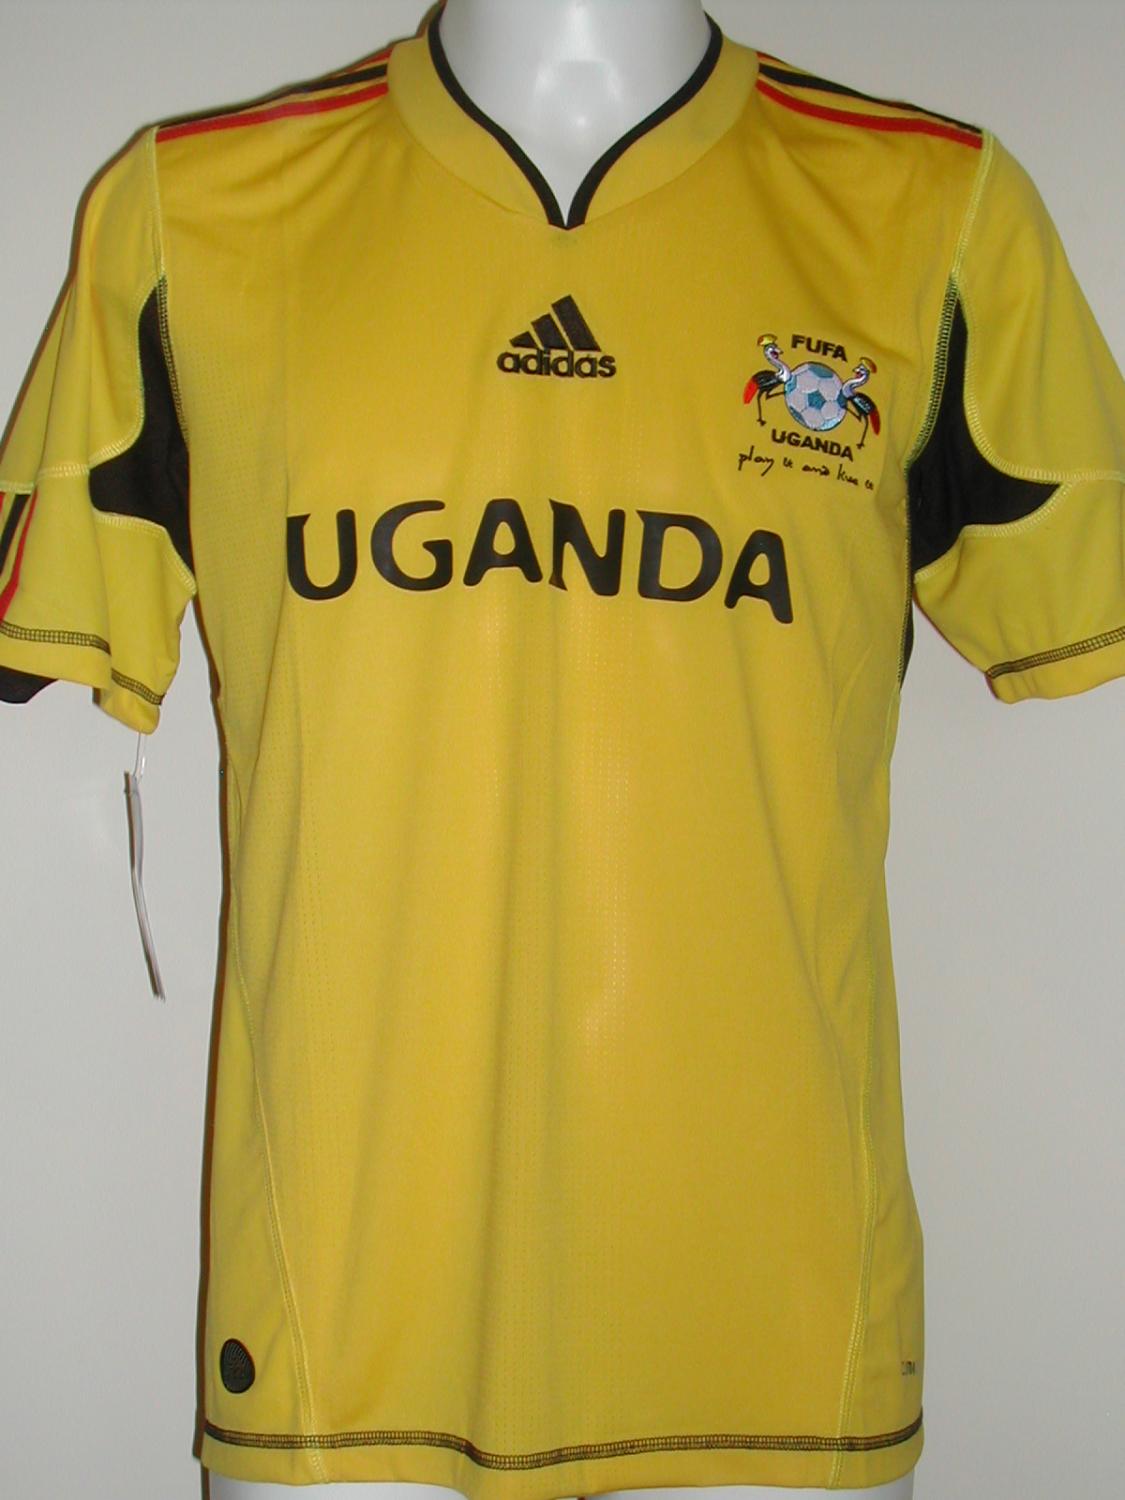 maillot de ouganda domicile 2012 rétro